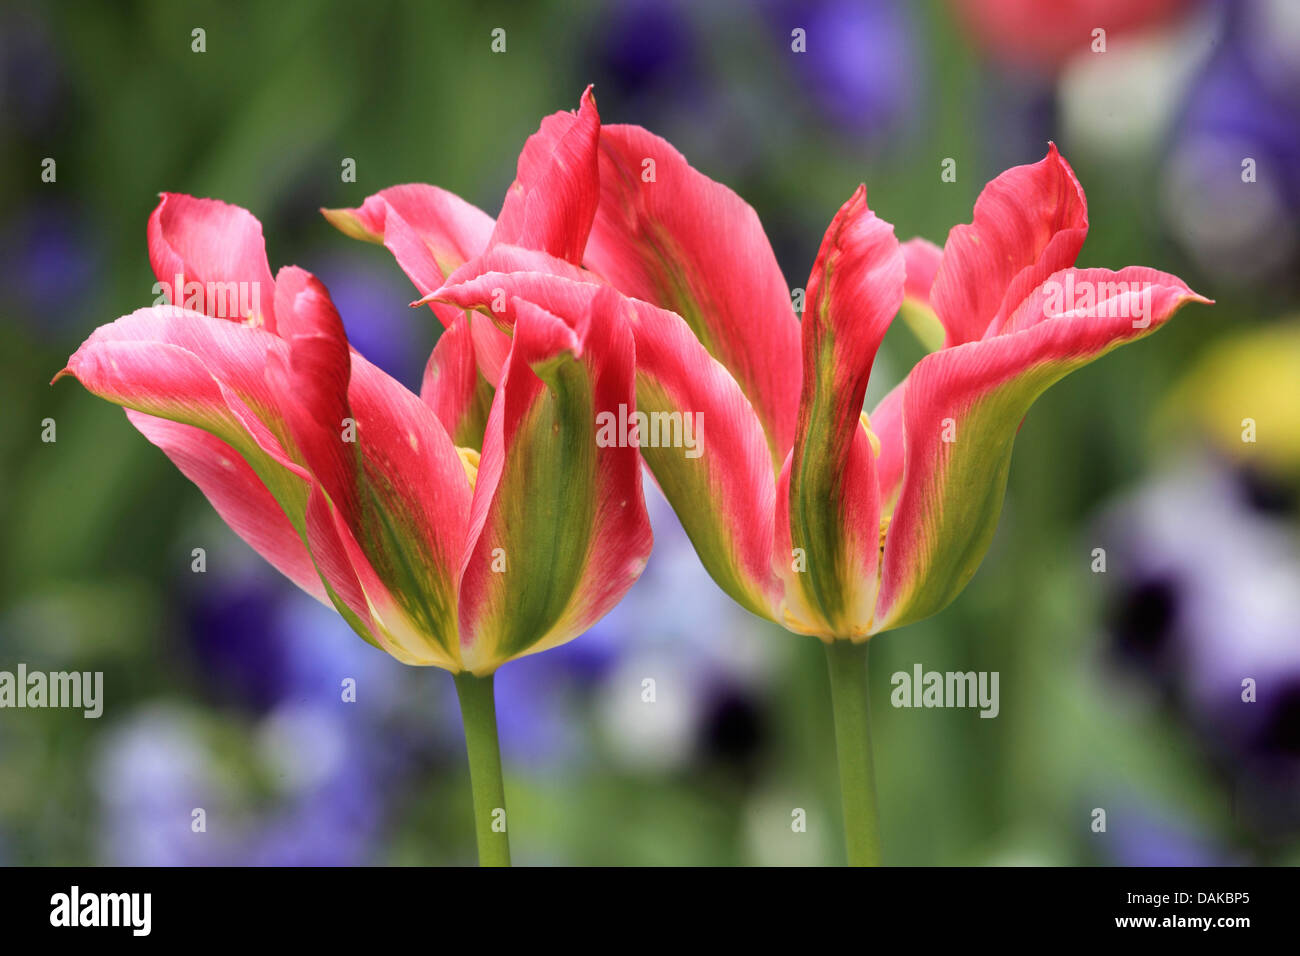 common garden tulip (Tulipa gesneriana), green and red tulip flowers Stock Photo